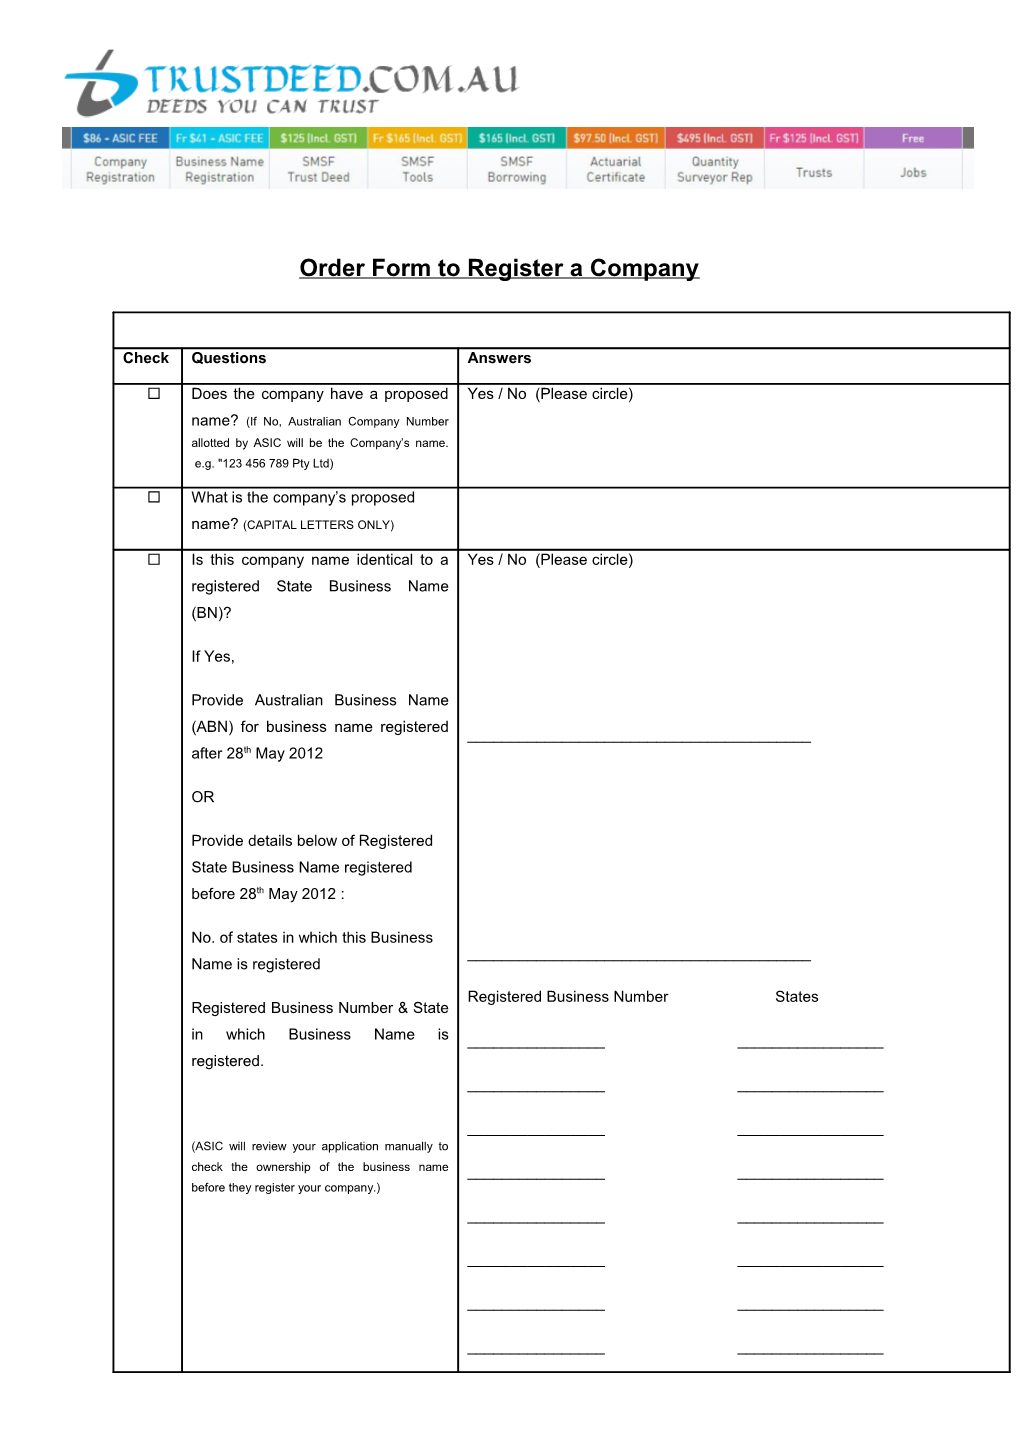 Order Form Toregister a Company